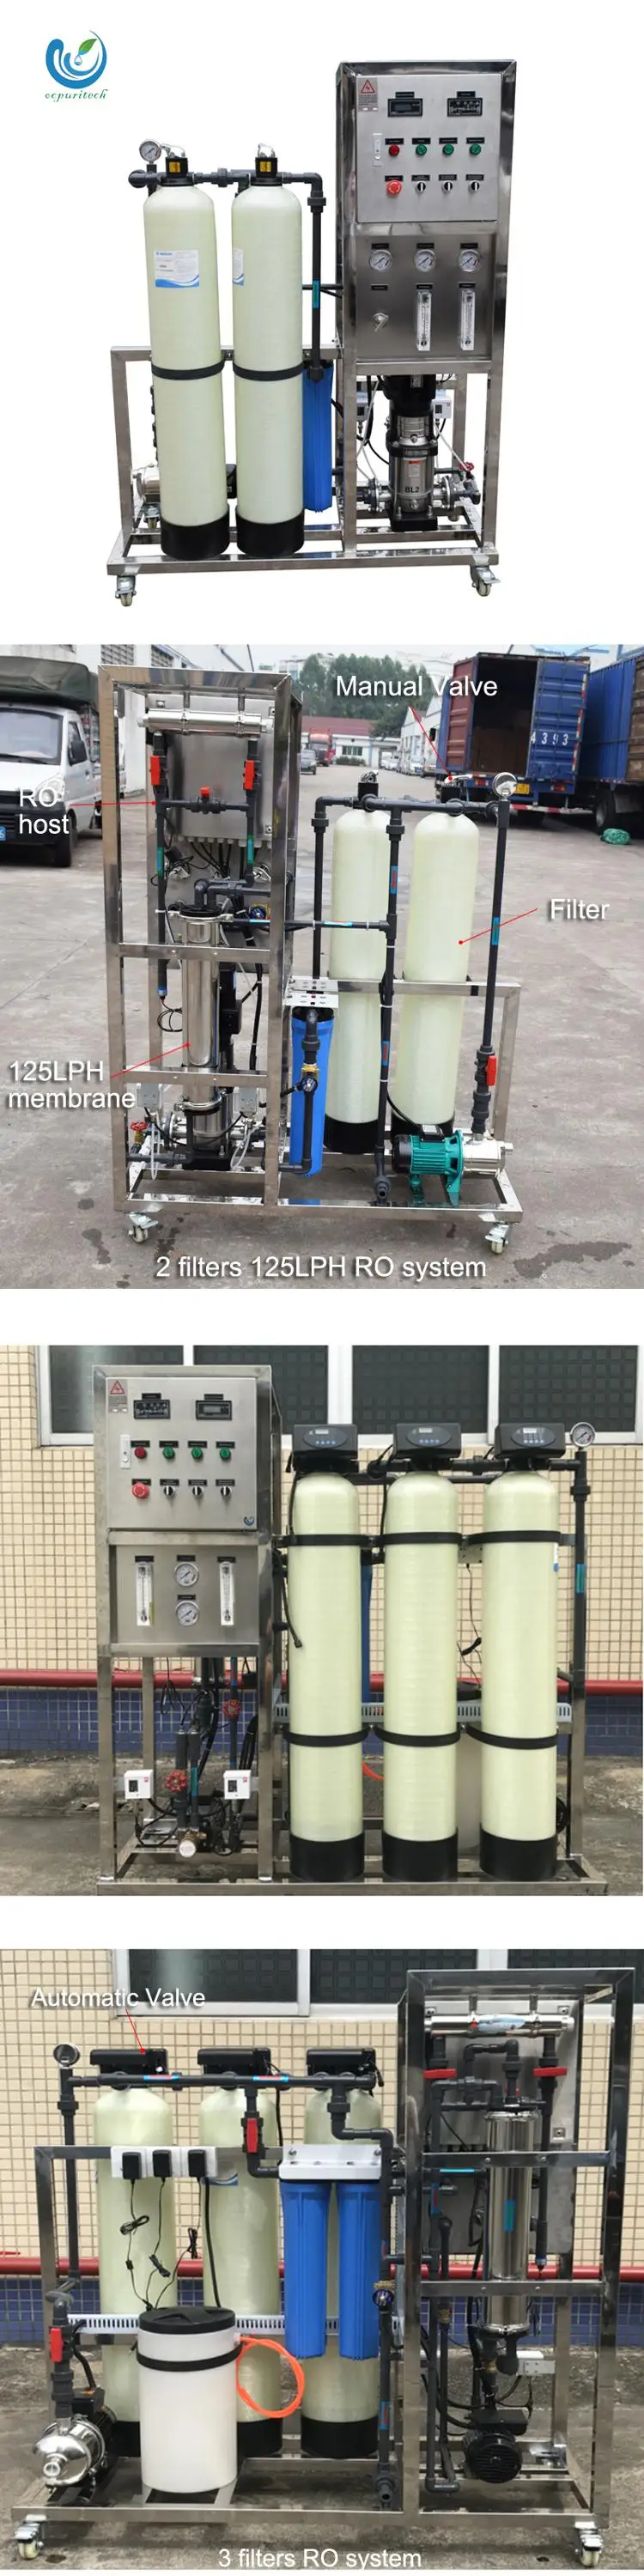 800 gpd ro system filter tank frp solar water treatment plant